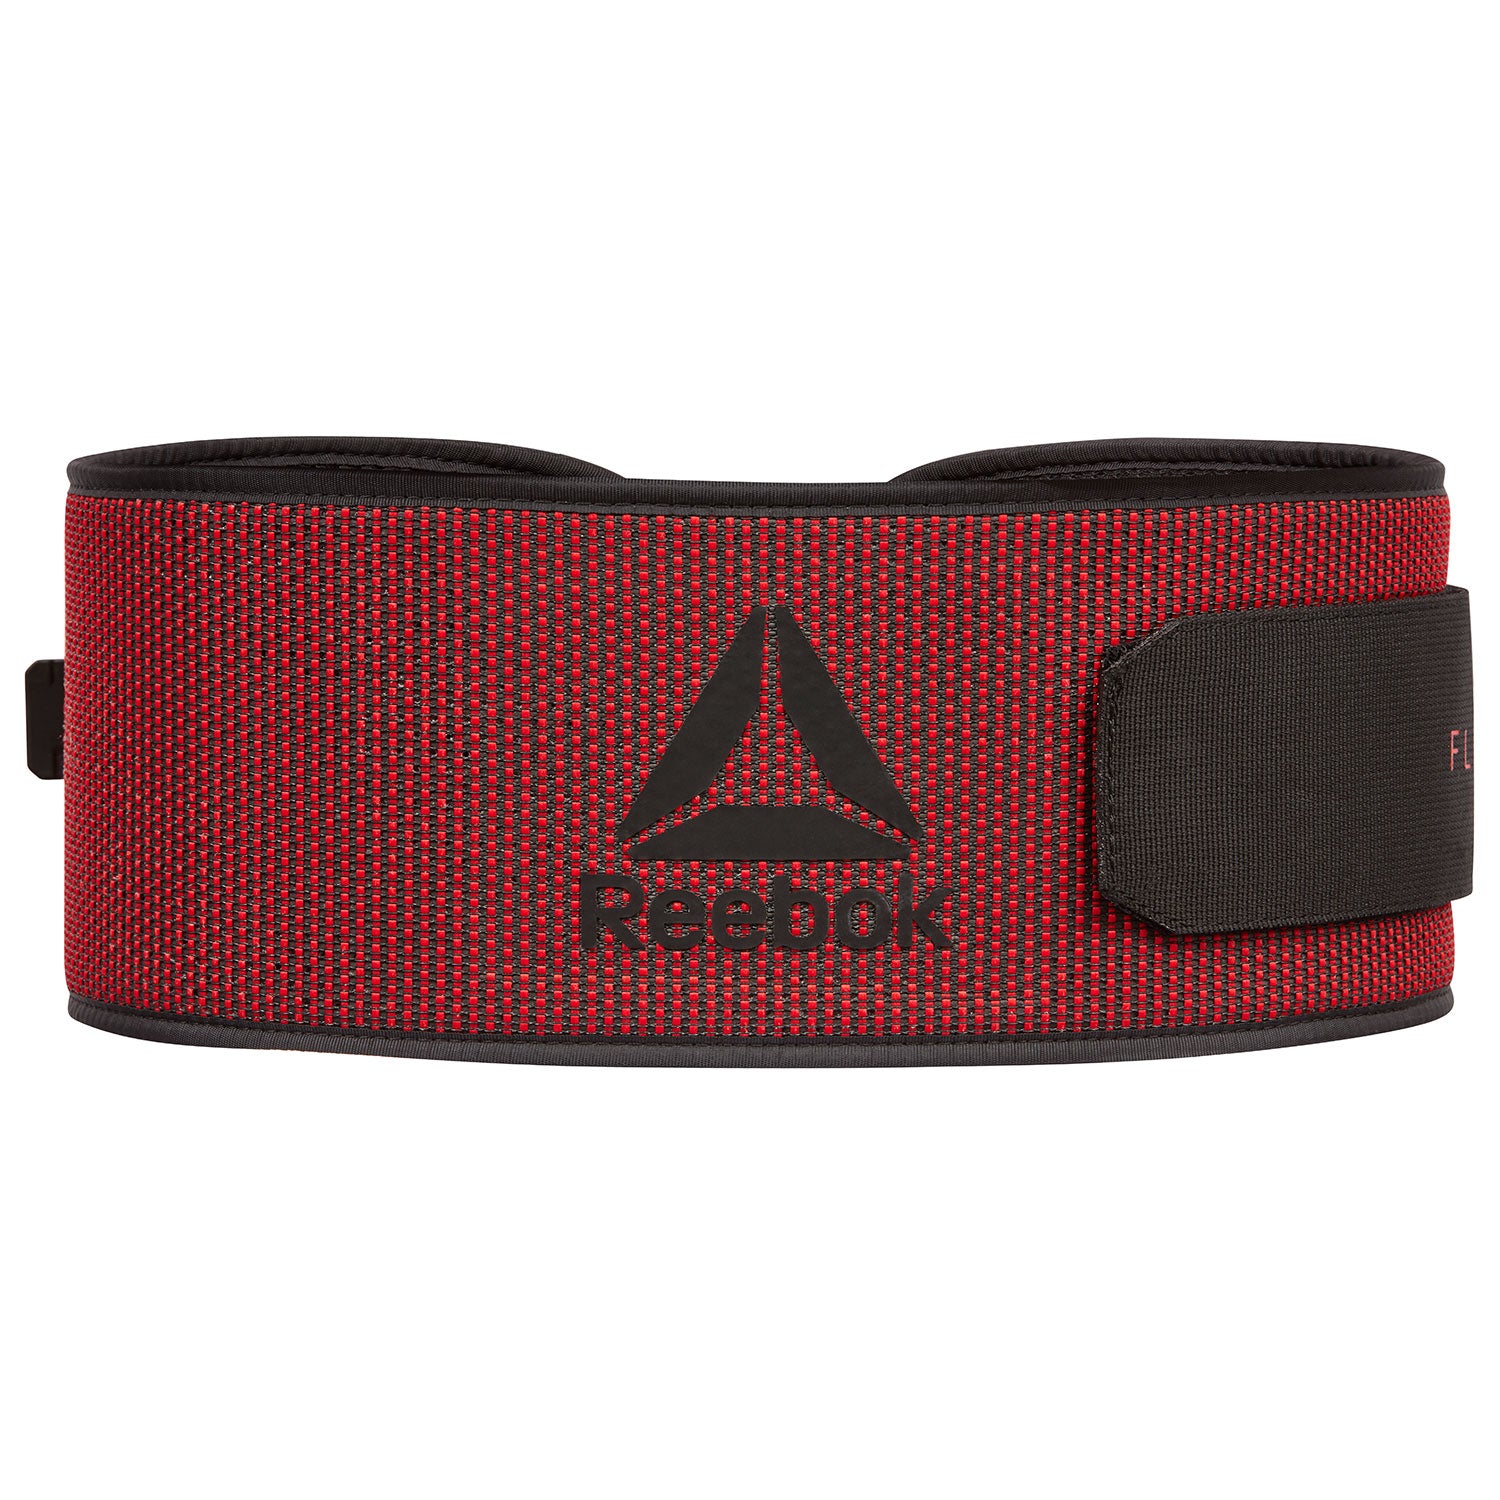 Reebok Flexweave Power Lifting Belt X-Large in Red